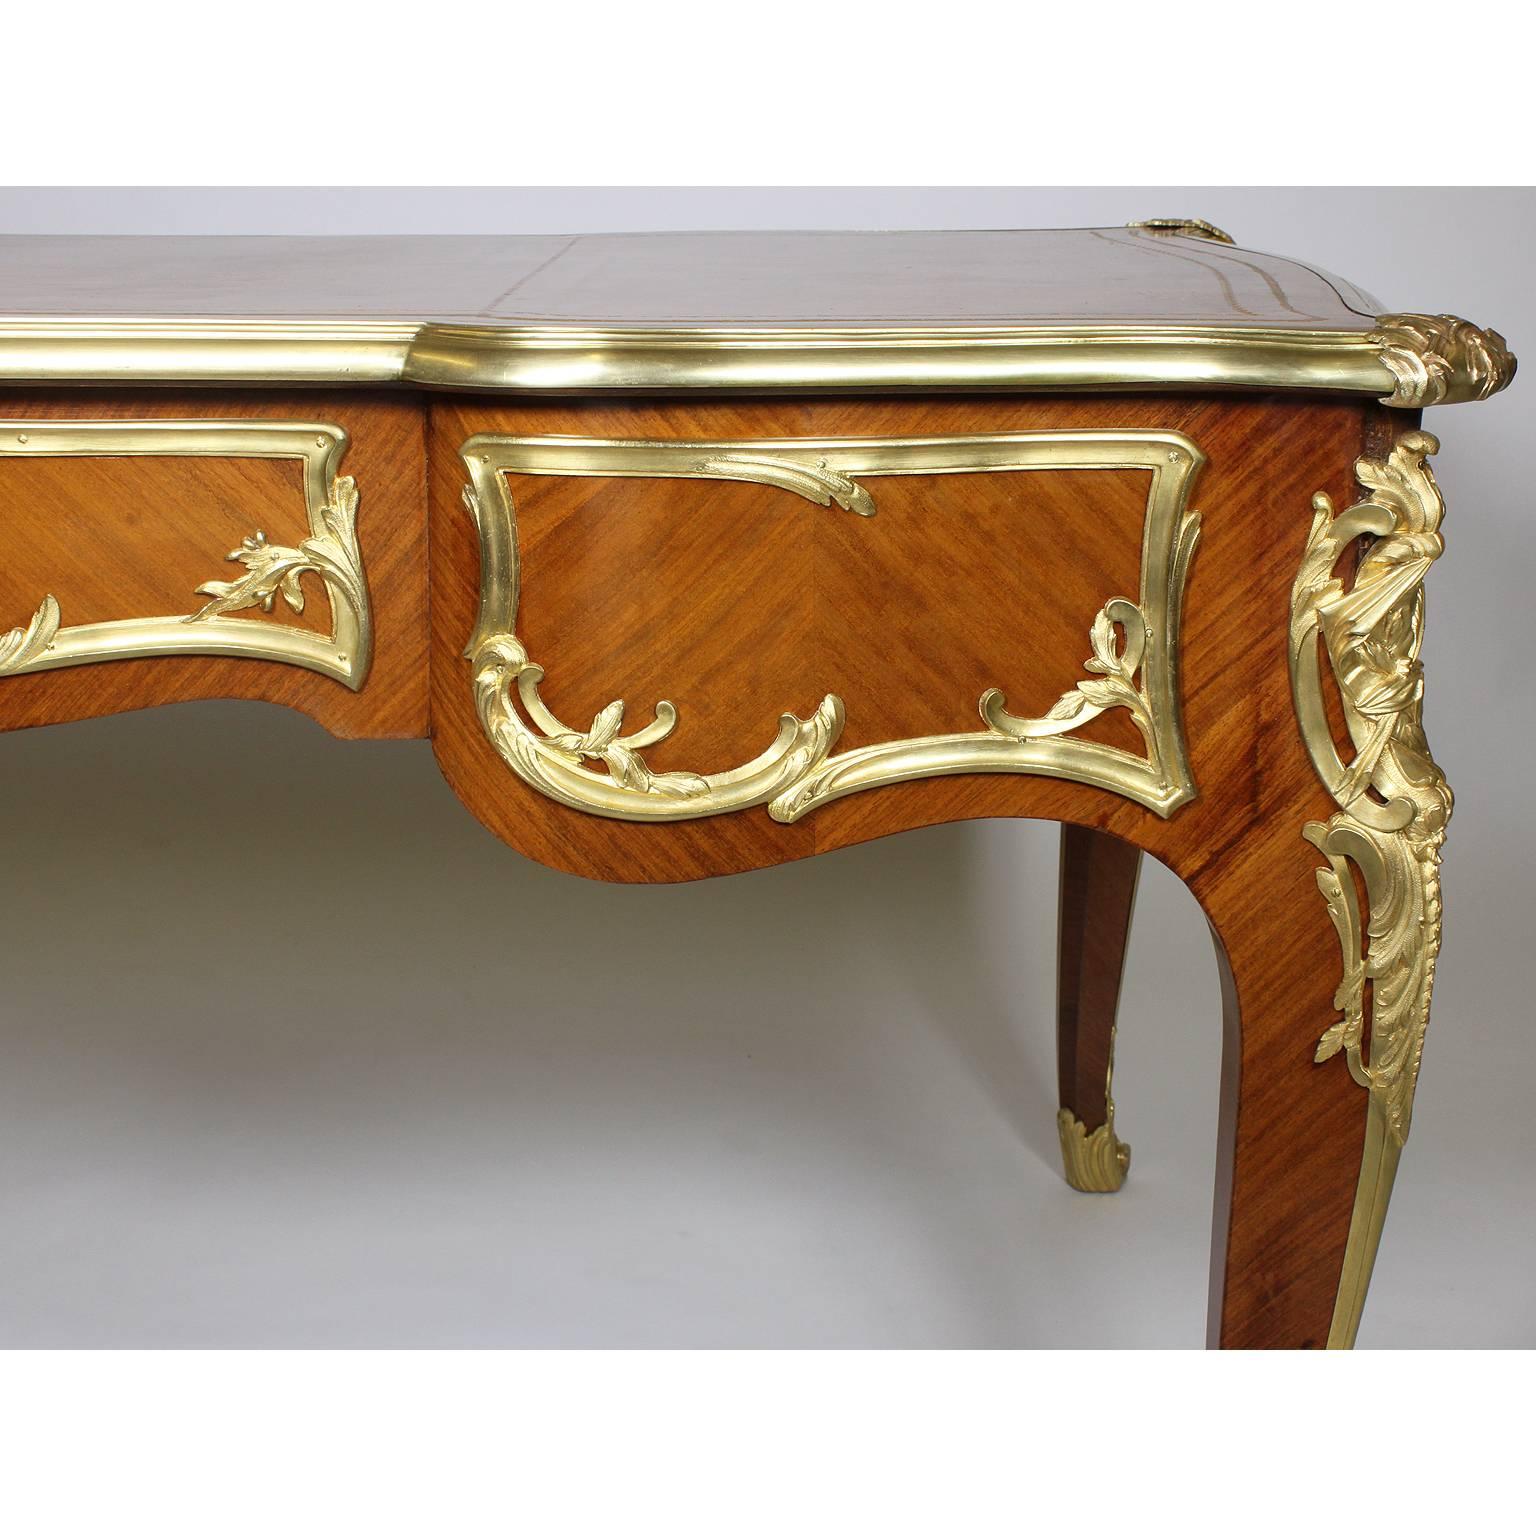 20th Century French Louis XV Style Gilt Bronze-Mounted Kingwood Three-Drawer Bureau Plat Desk For Sale